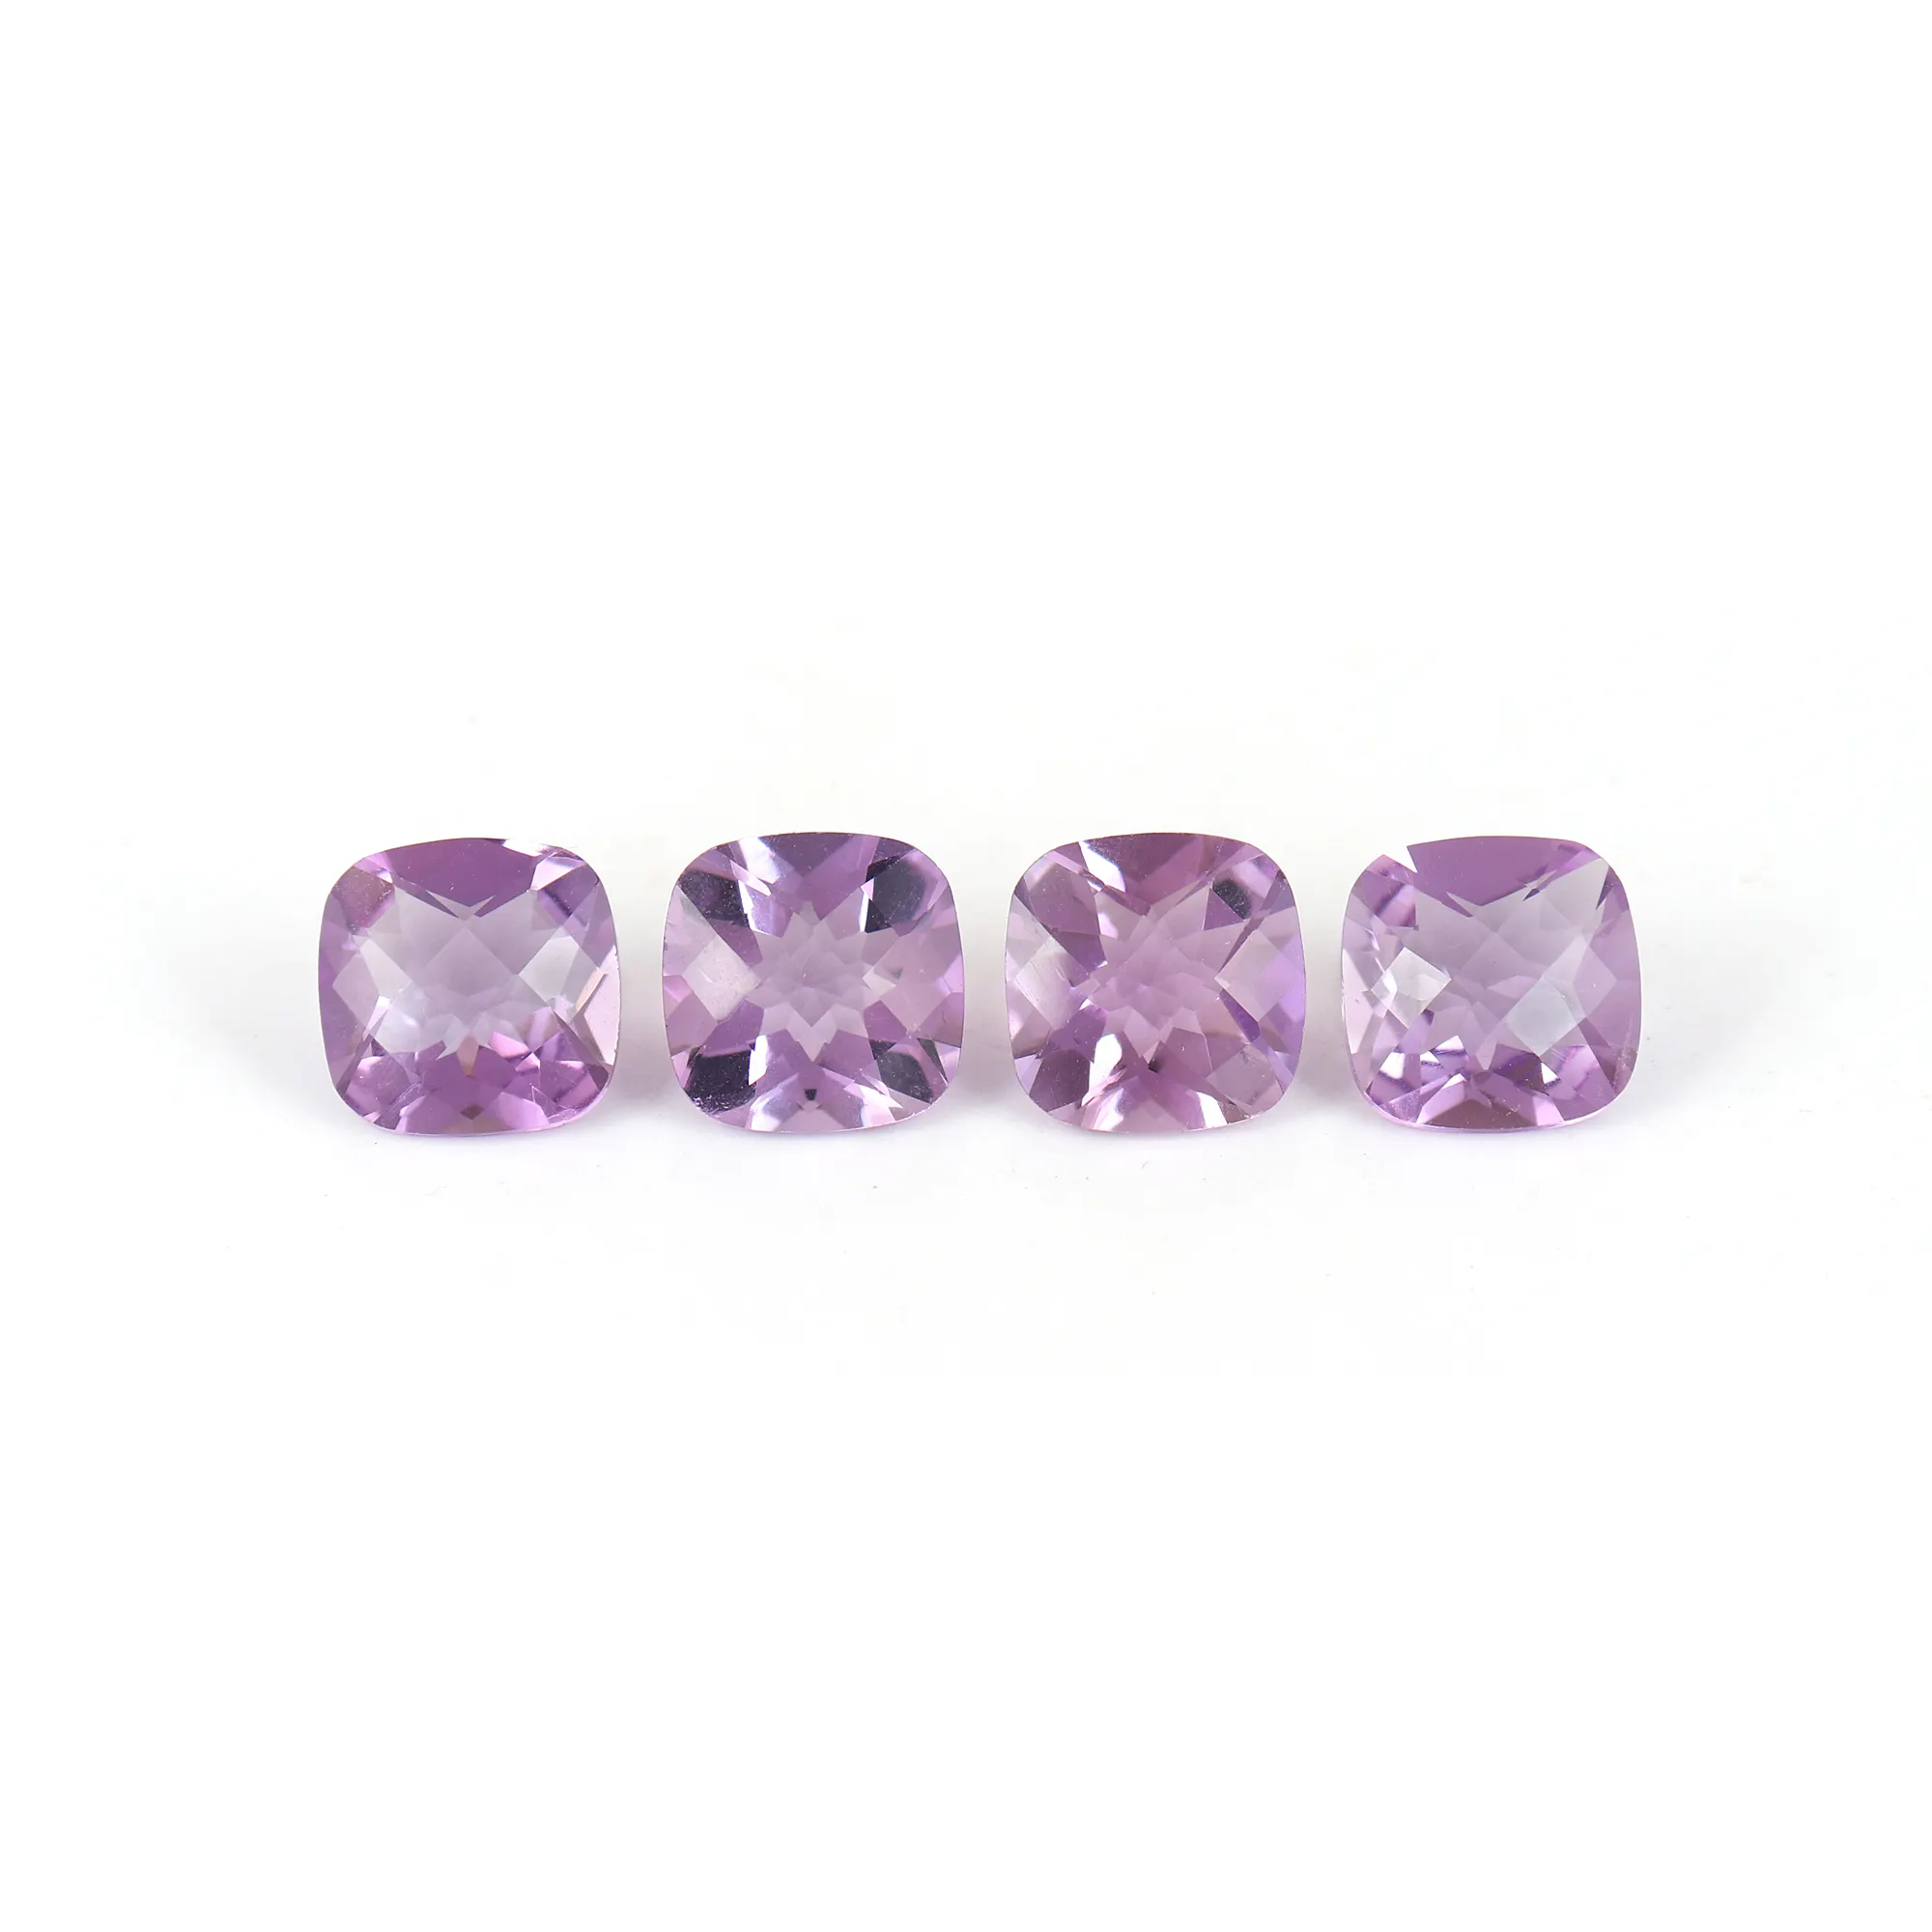 Natural 7mm Amethyst bantal bentuk batu permata longgar terkalibrasi Chekker memotong permata batu perhiasan membuat bersertifikat ungu Amethyst